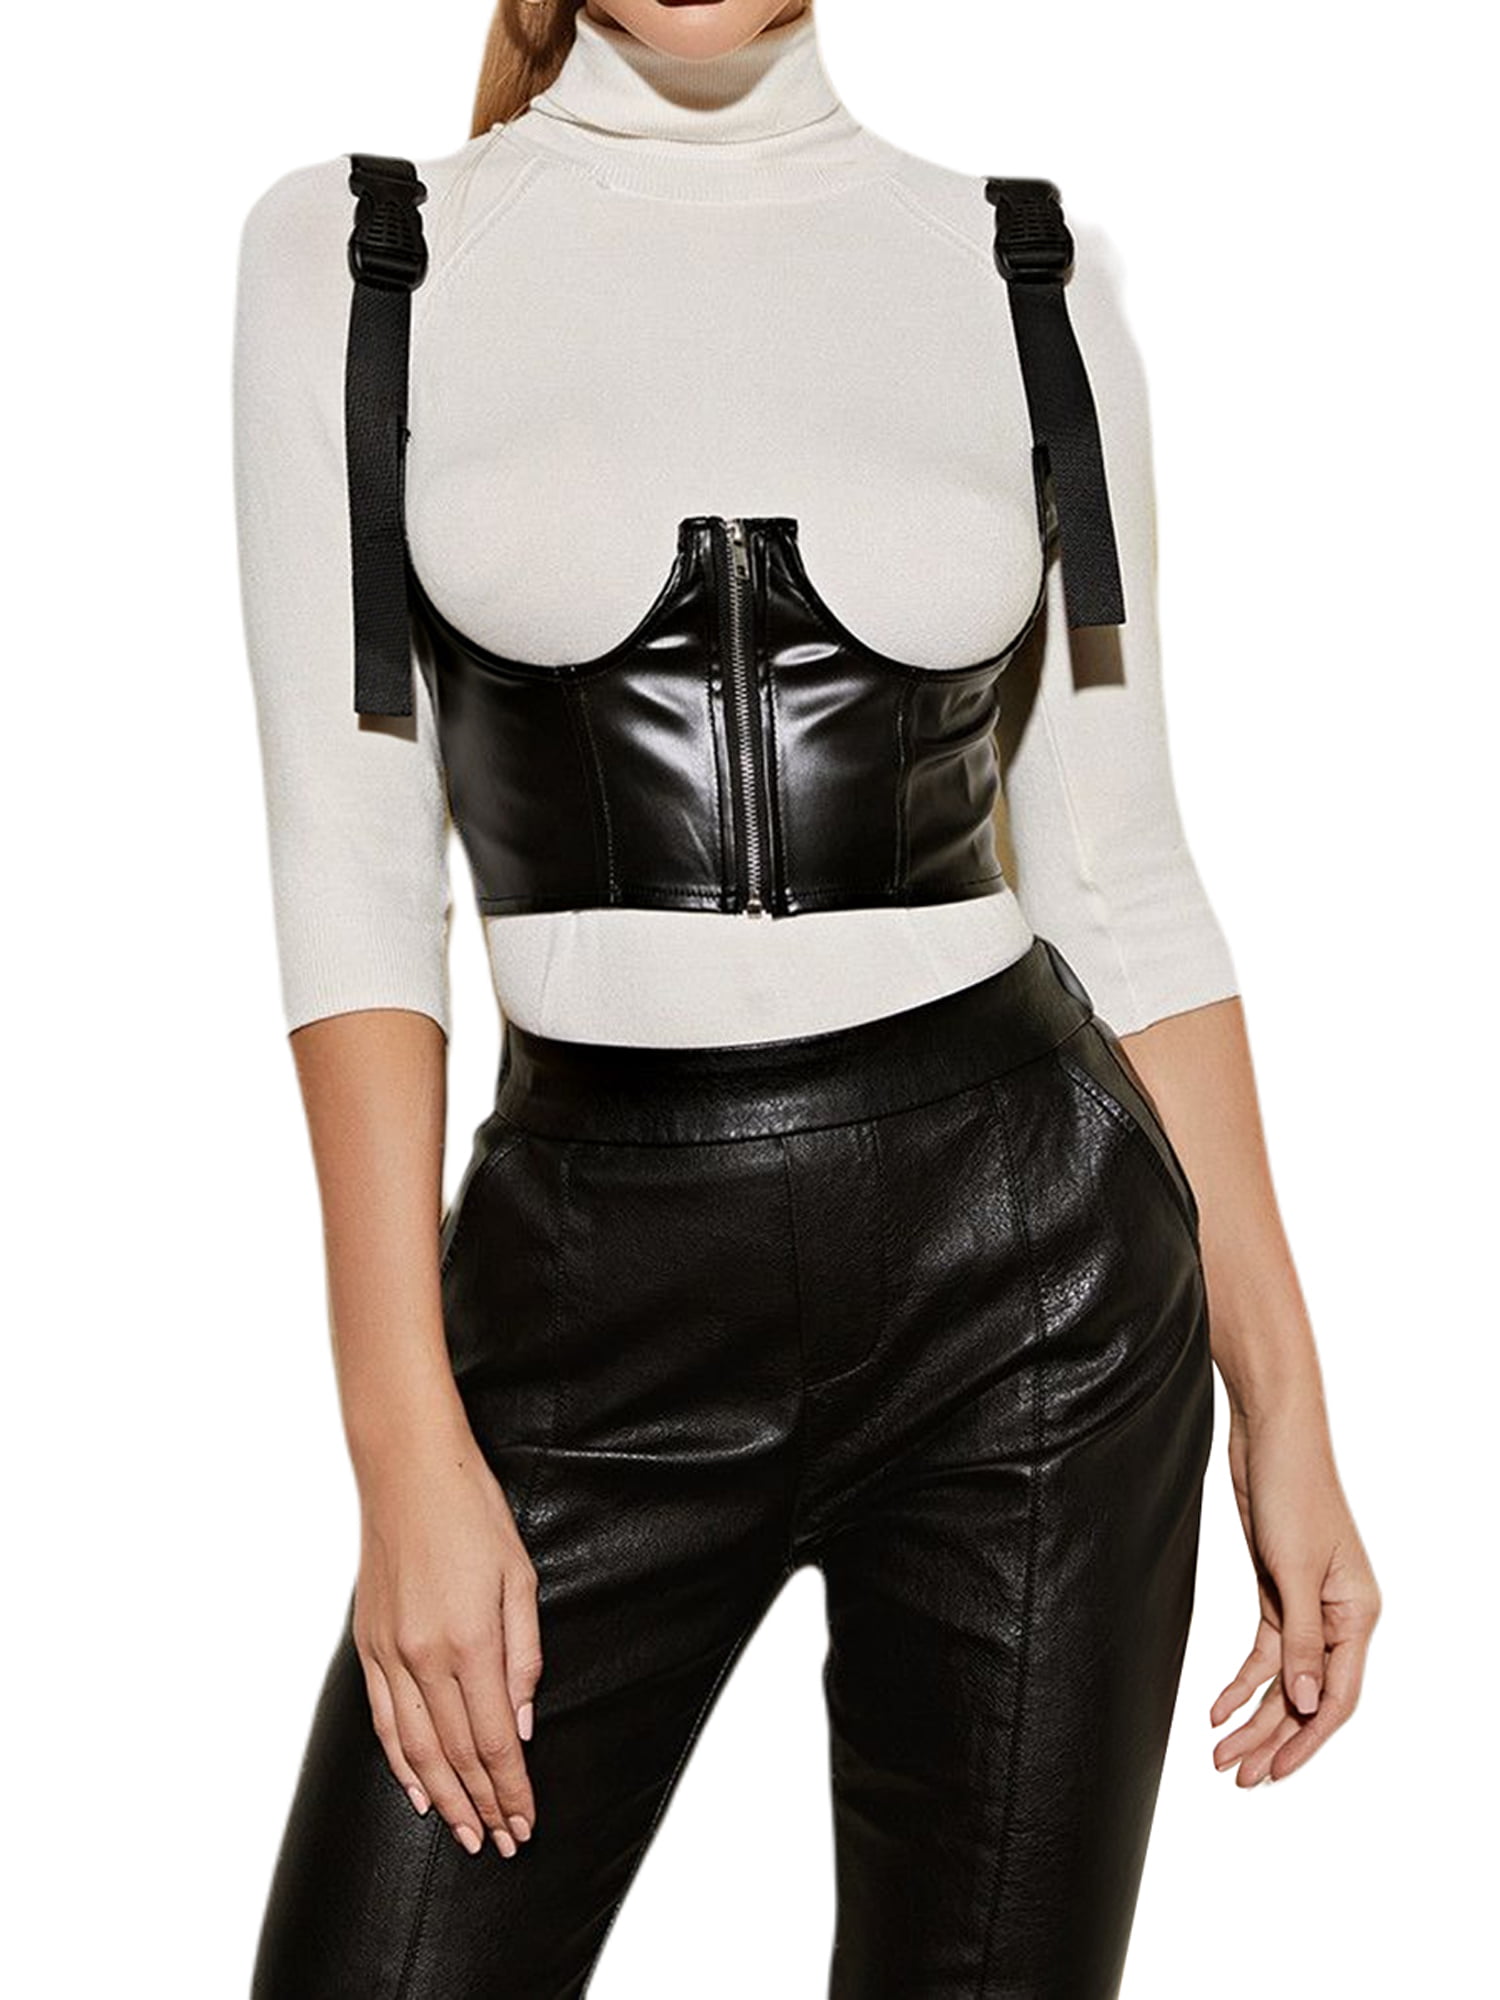 Women PU Leather Underbust Corset Fashion Control Tummy Waist Trainer Top Zipper Lace-Up Wrap Bustier Belt Shapewear